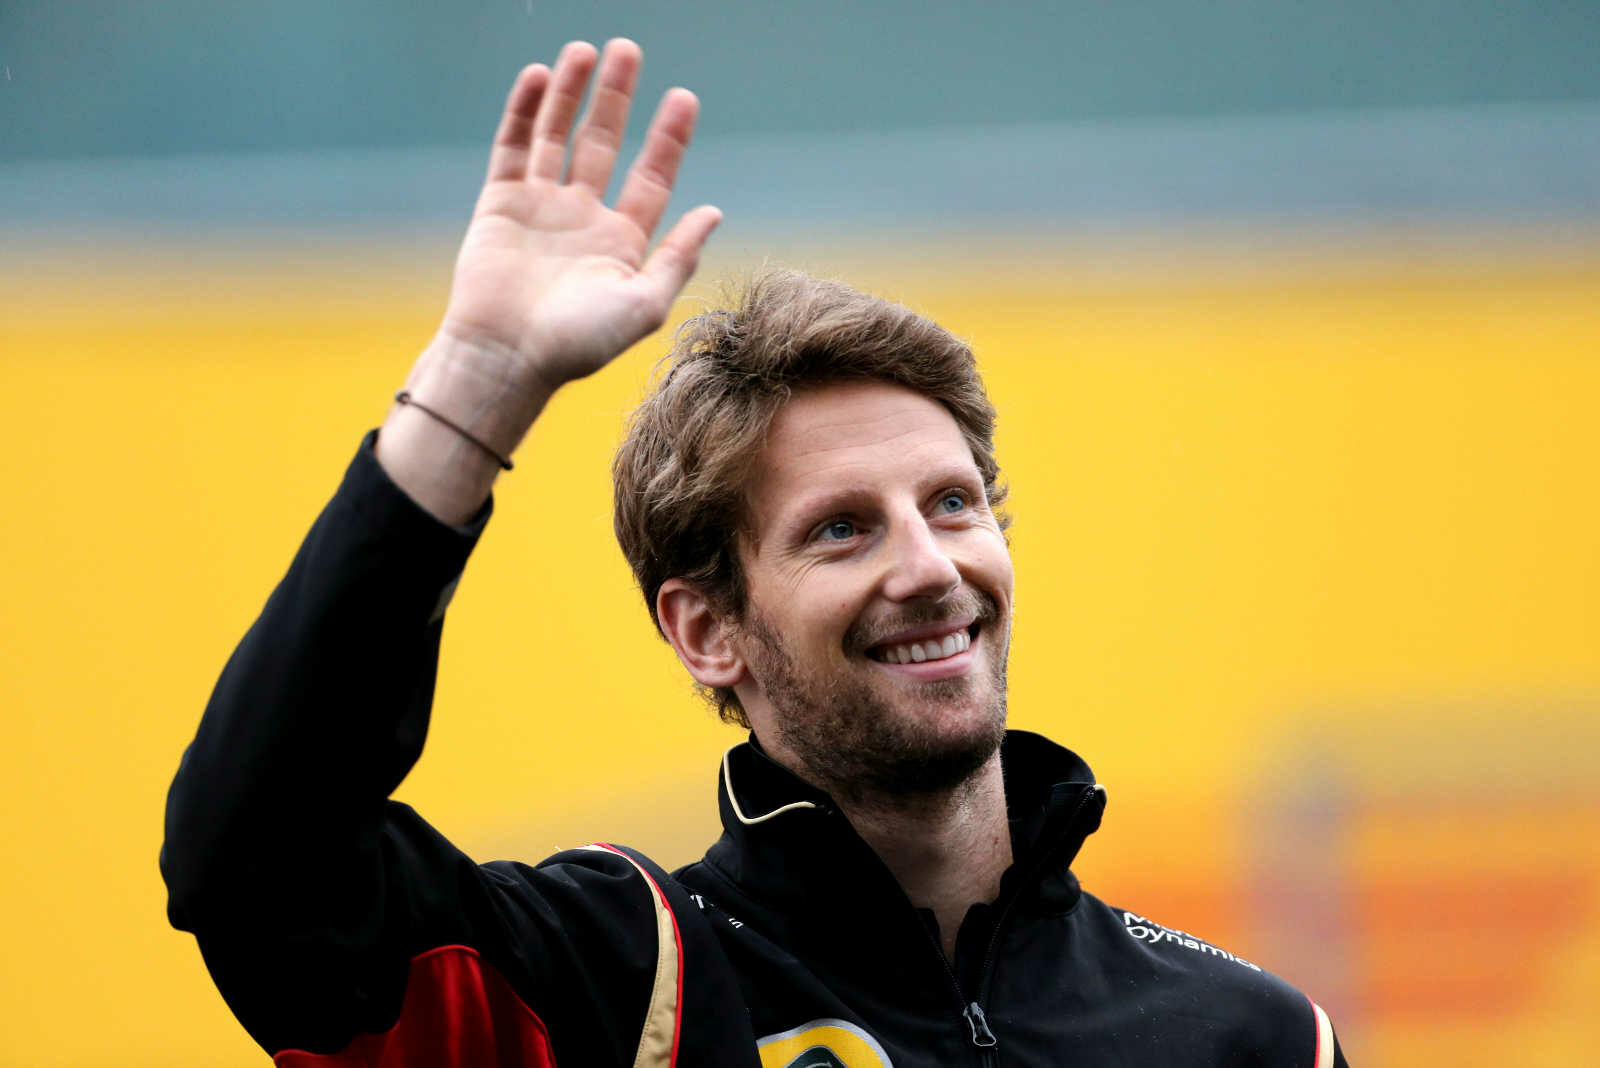 Romain_Grosjean_Lotus_F1_Team_Grand_Prix_Japan_thursday